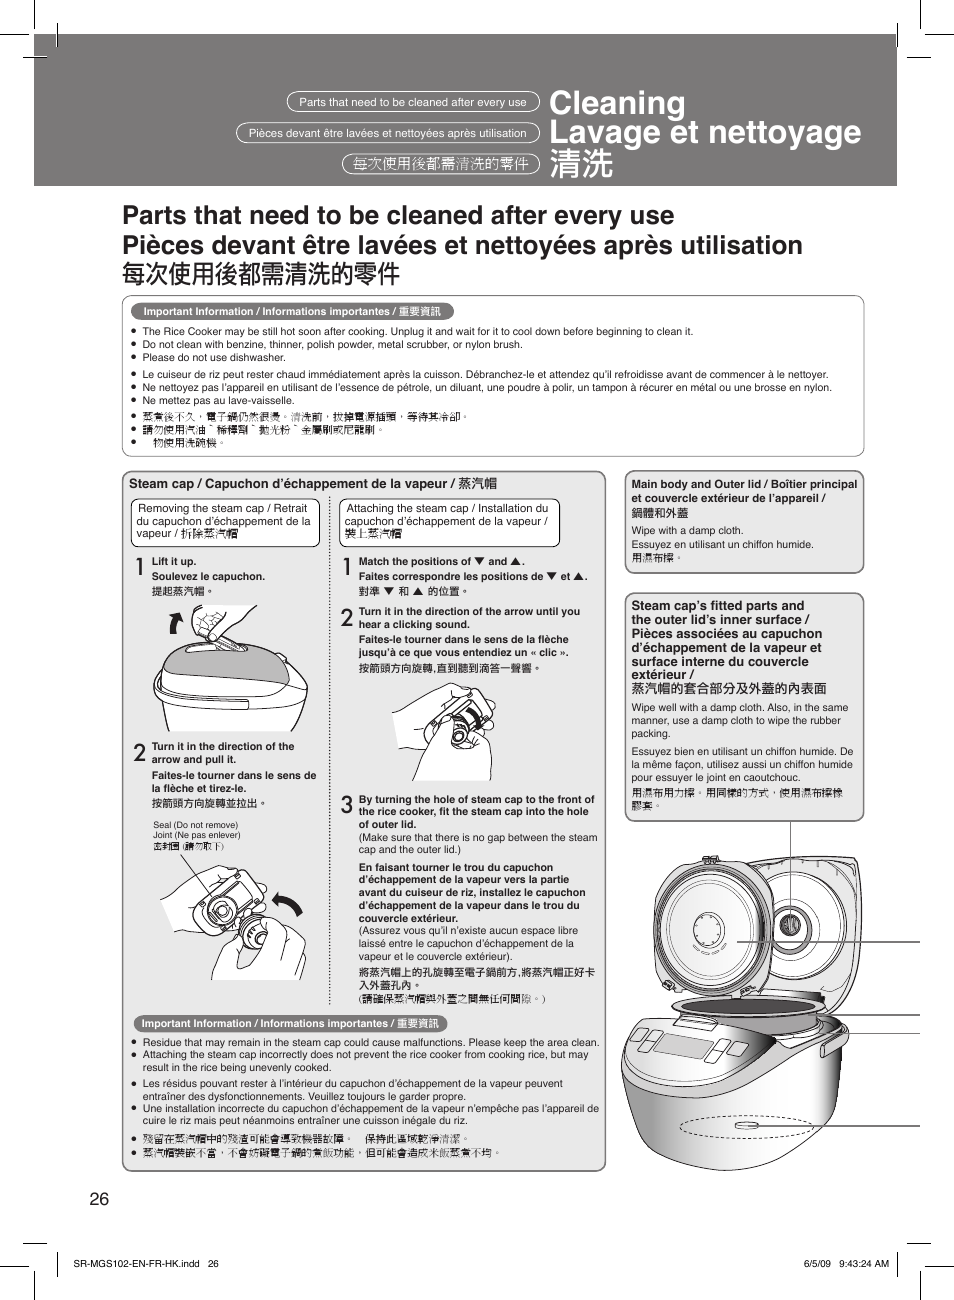 Cleaning, Lavage et nettoyage, Cleaning lavage et nettoyage 清洗 | Panasonic SR-MGS102 Manuel d'utilisation | Page 26 / 32